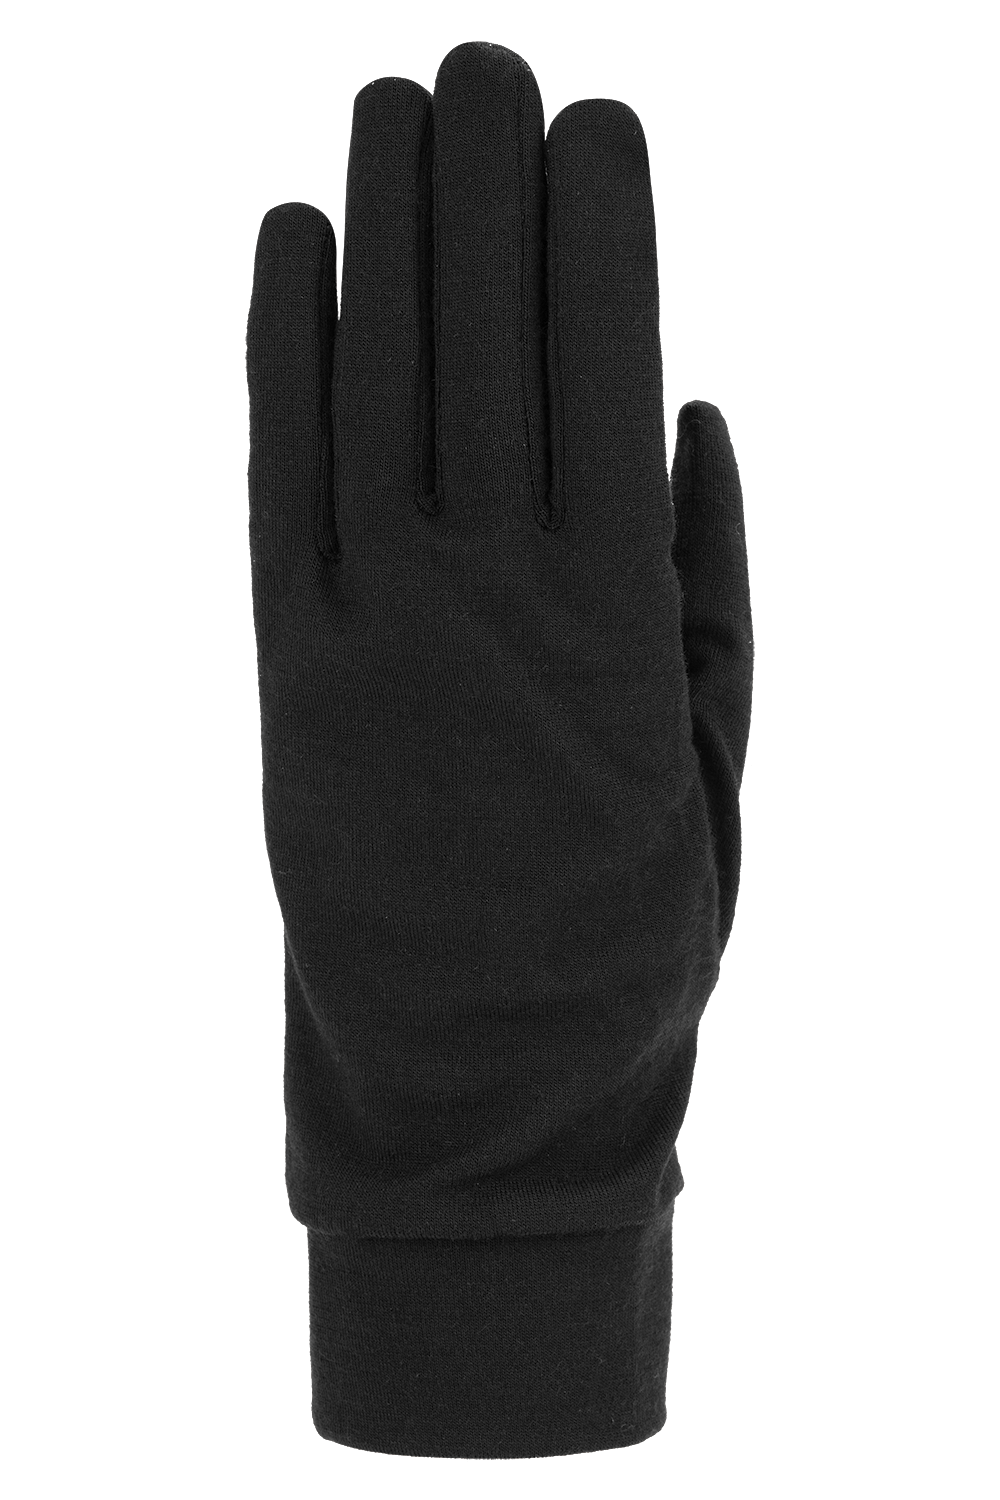 Merino Wool Liner Gloves - Adult-Glove-Auclair-XS-BLACK-Auclair Sports